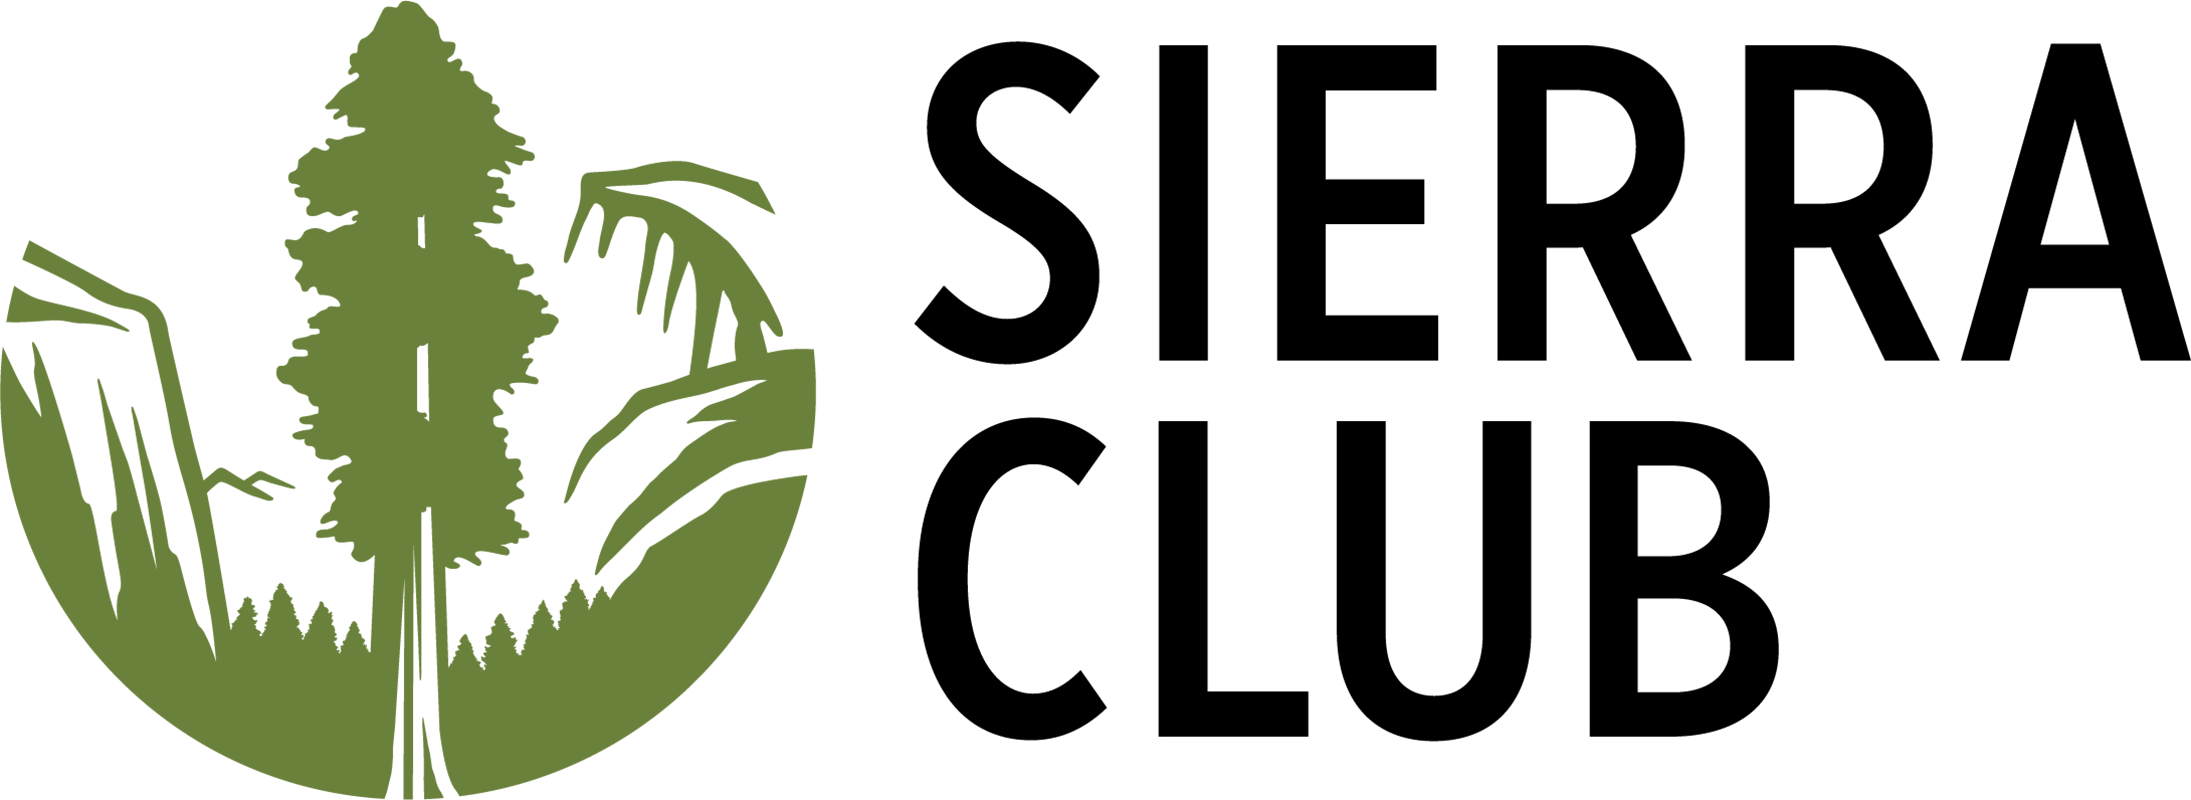 Sierra Webform chapter logo